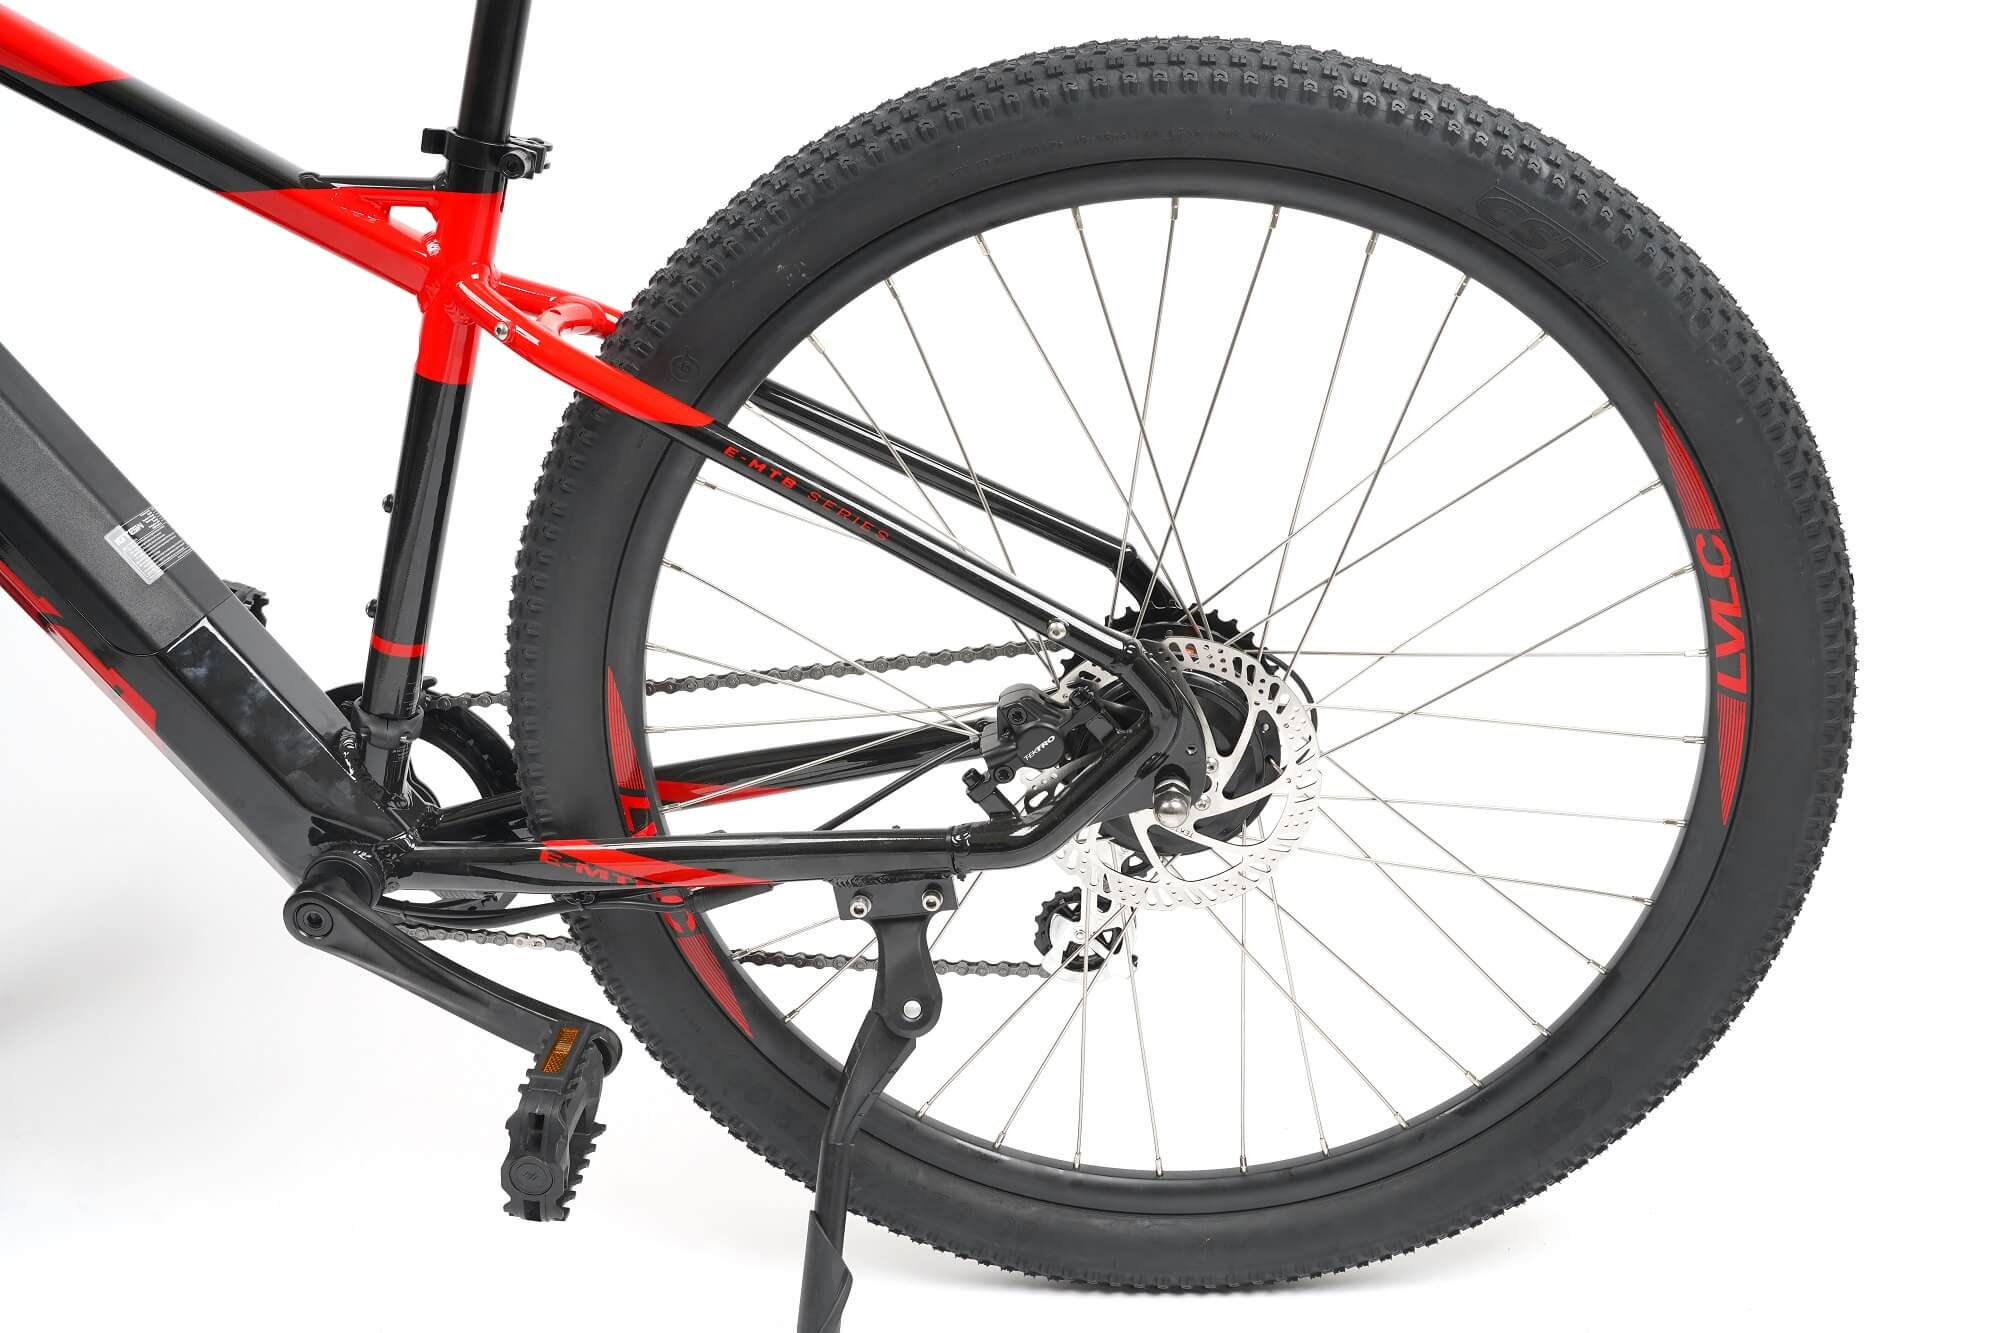 LOVELEC B400350 Mountainbike cm, Rahmenhöhe: Zoll, (Laufradgröße: schwarz/rot) 29 Erwachsene-Rad, Wh, 540 48,26